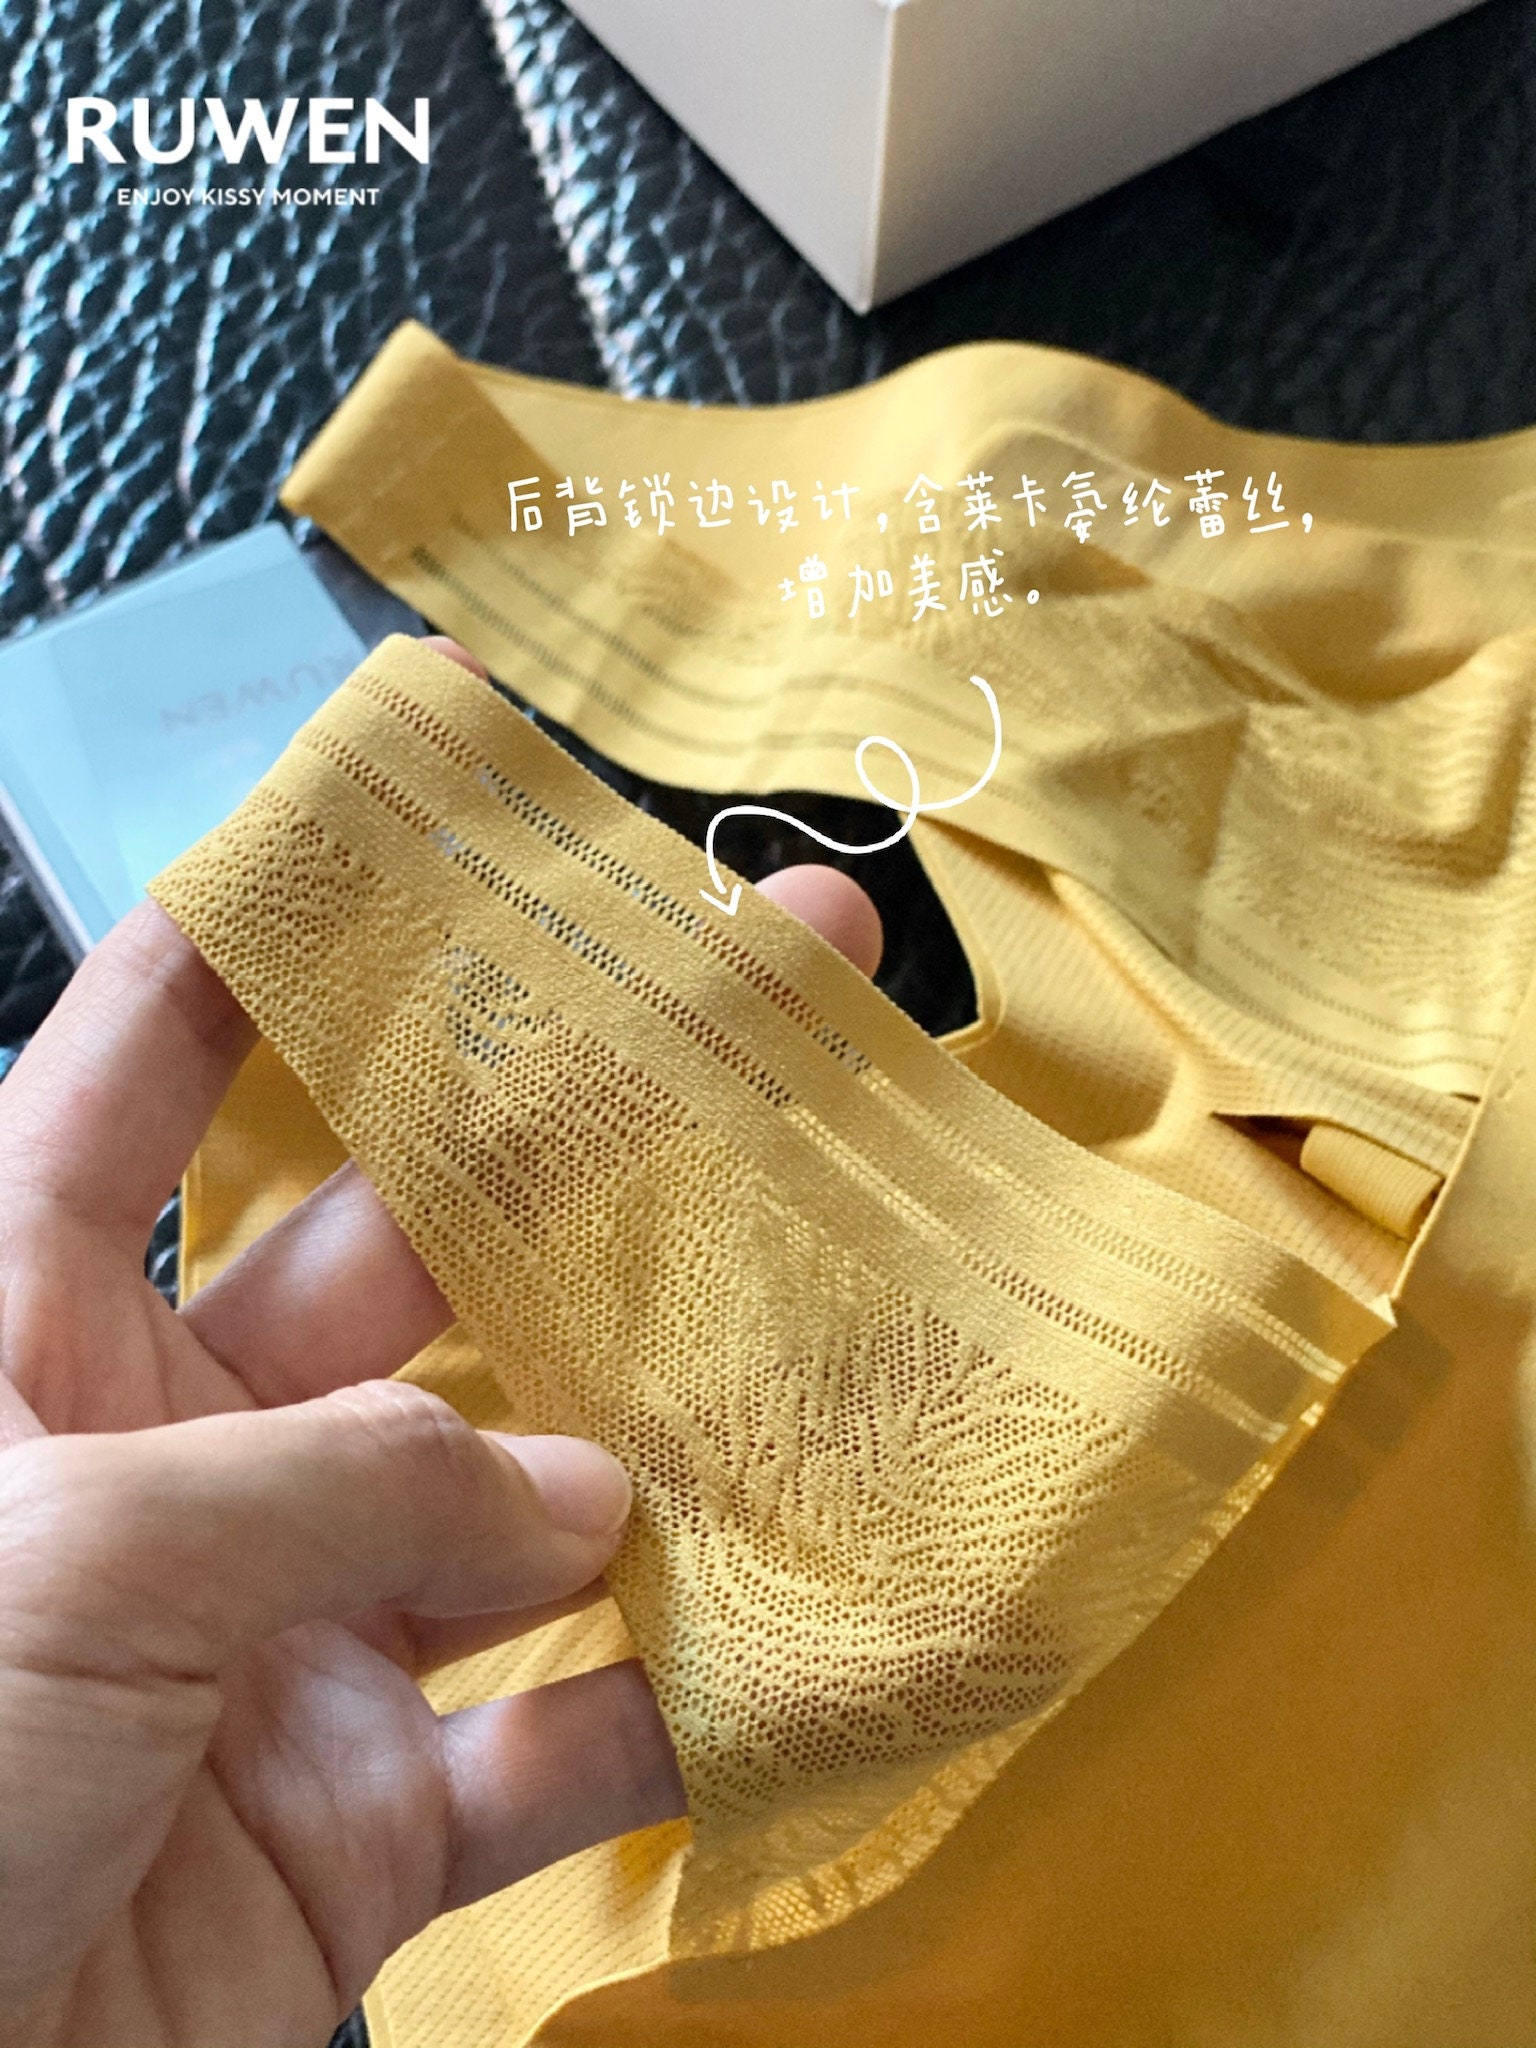 Women's Super-comfy Yellow Lace Strap Wireless Bra Seamless Design